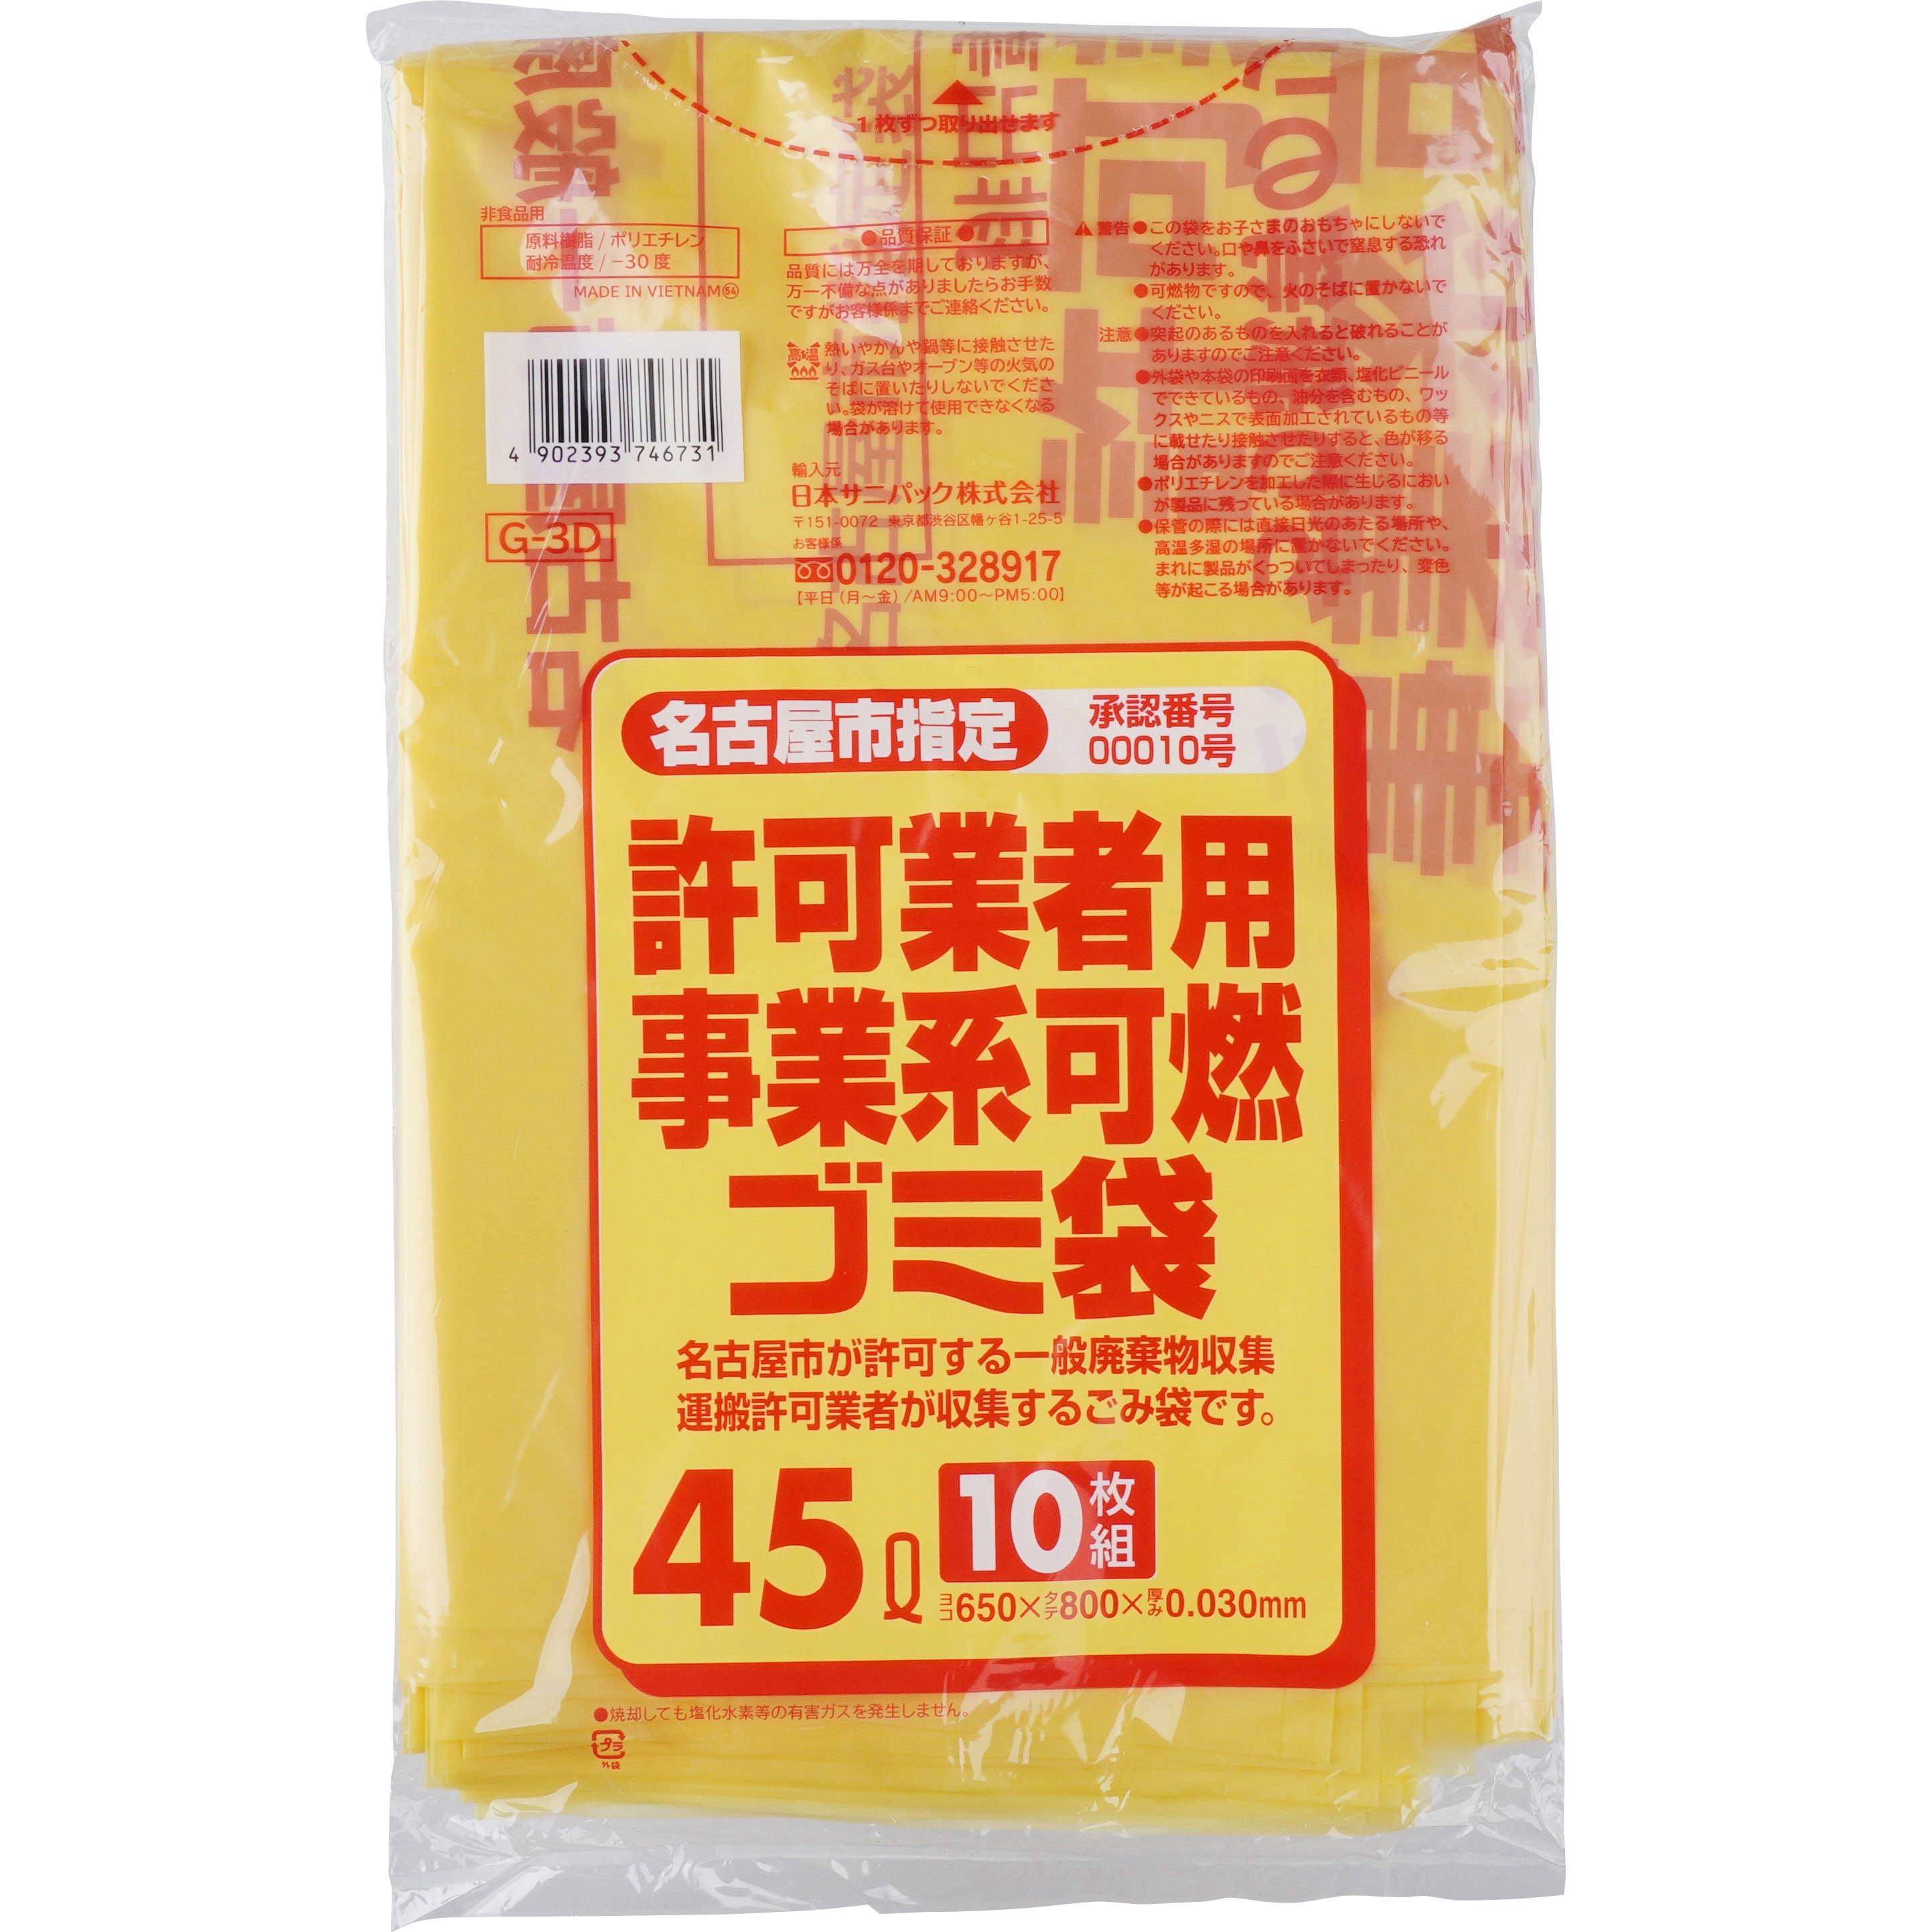 G-3D 名古屋市許可業者用事業系可燃ゴミ袋 1パック(10枚) 日本